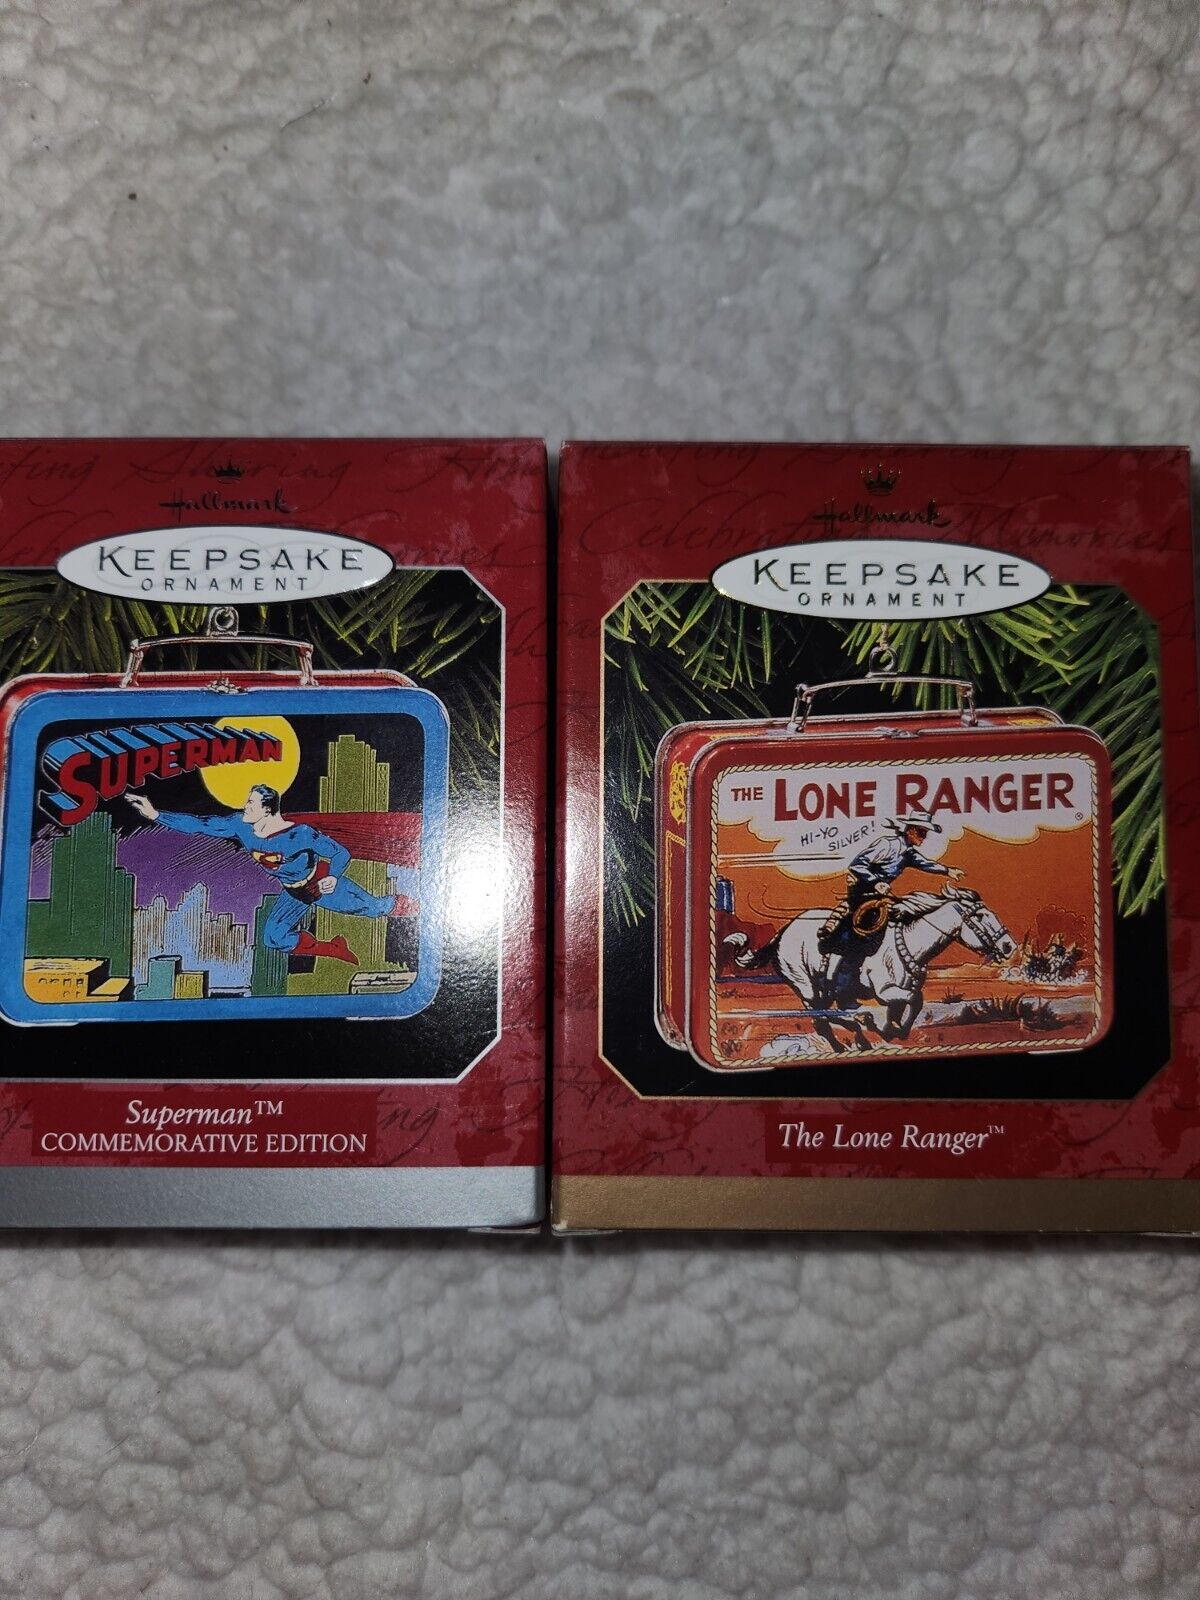 Hallmark 1997 Lone Ranger lunchbox and 1998 Superman lunchbox ornaments